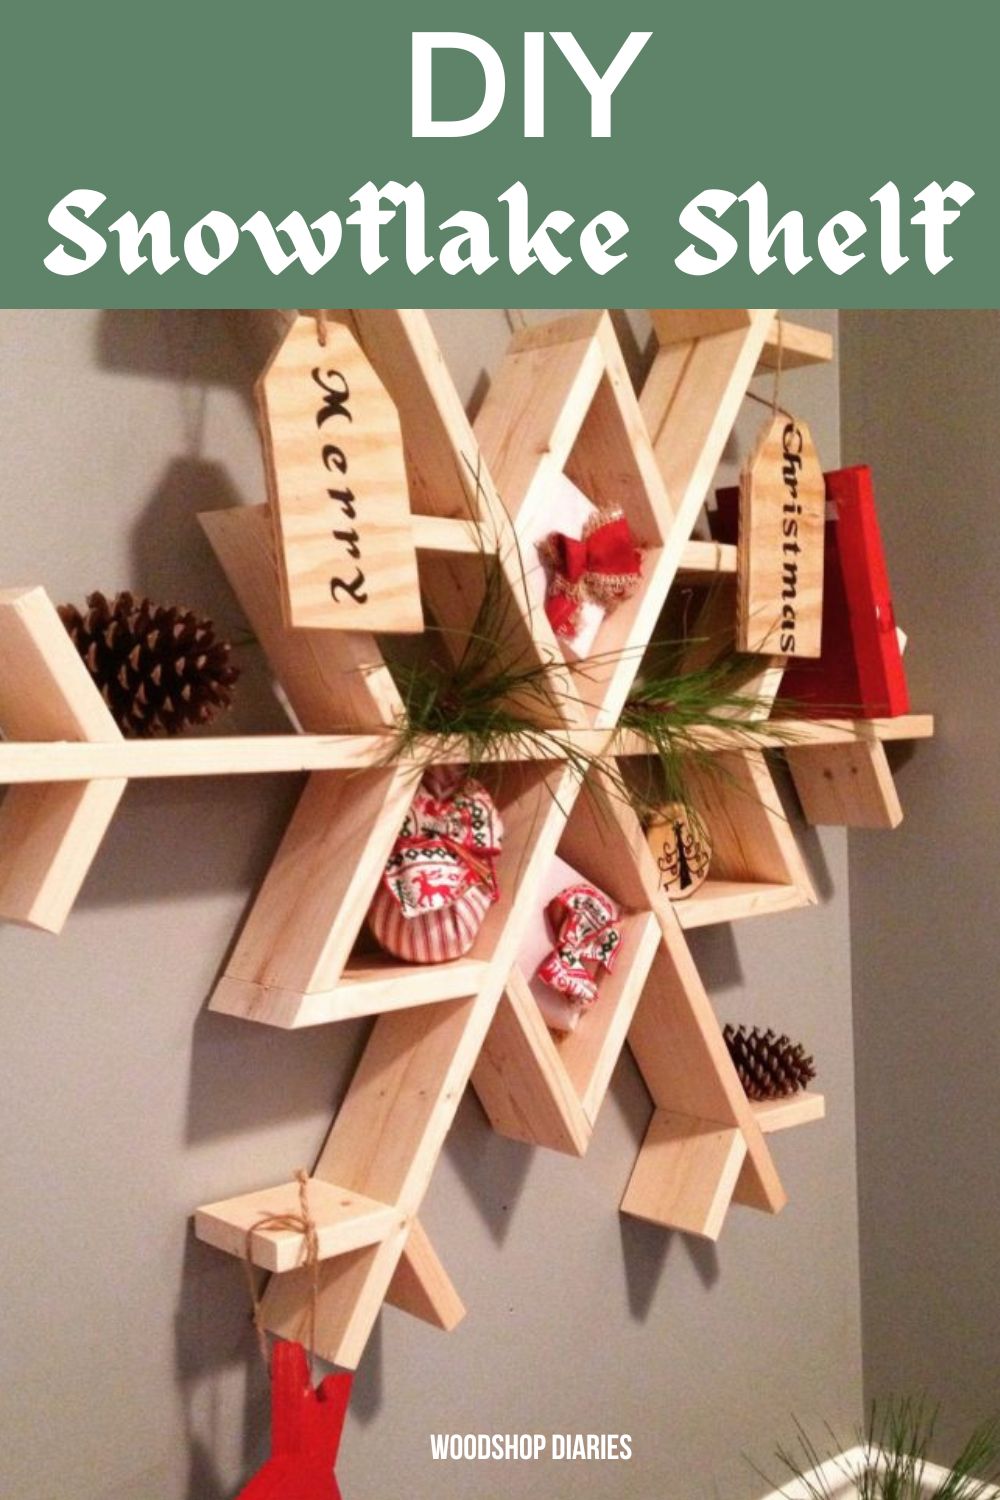 Snowflake shelf with decorations for Christmas and text overlay "DIY Snowflake Shelf"